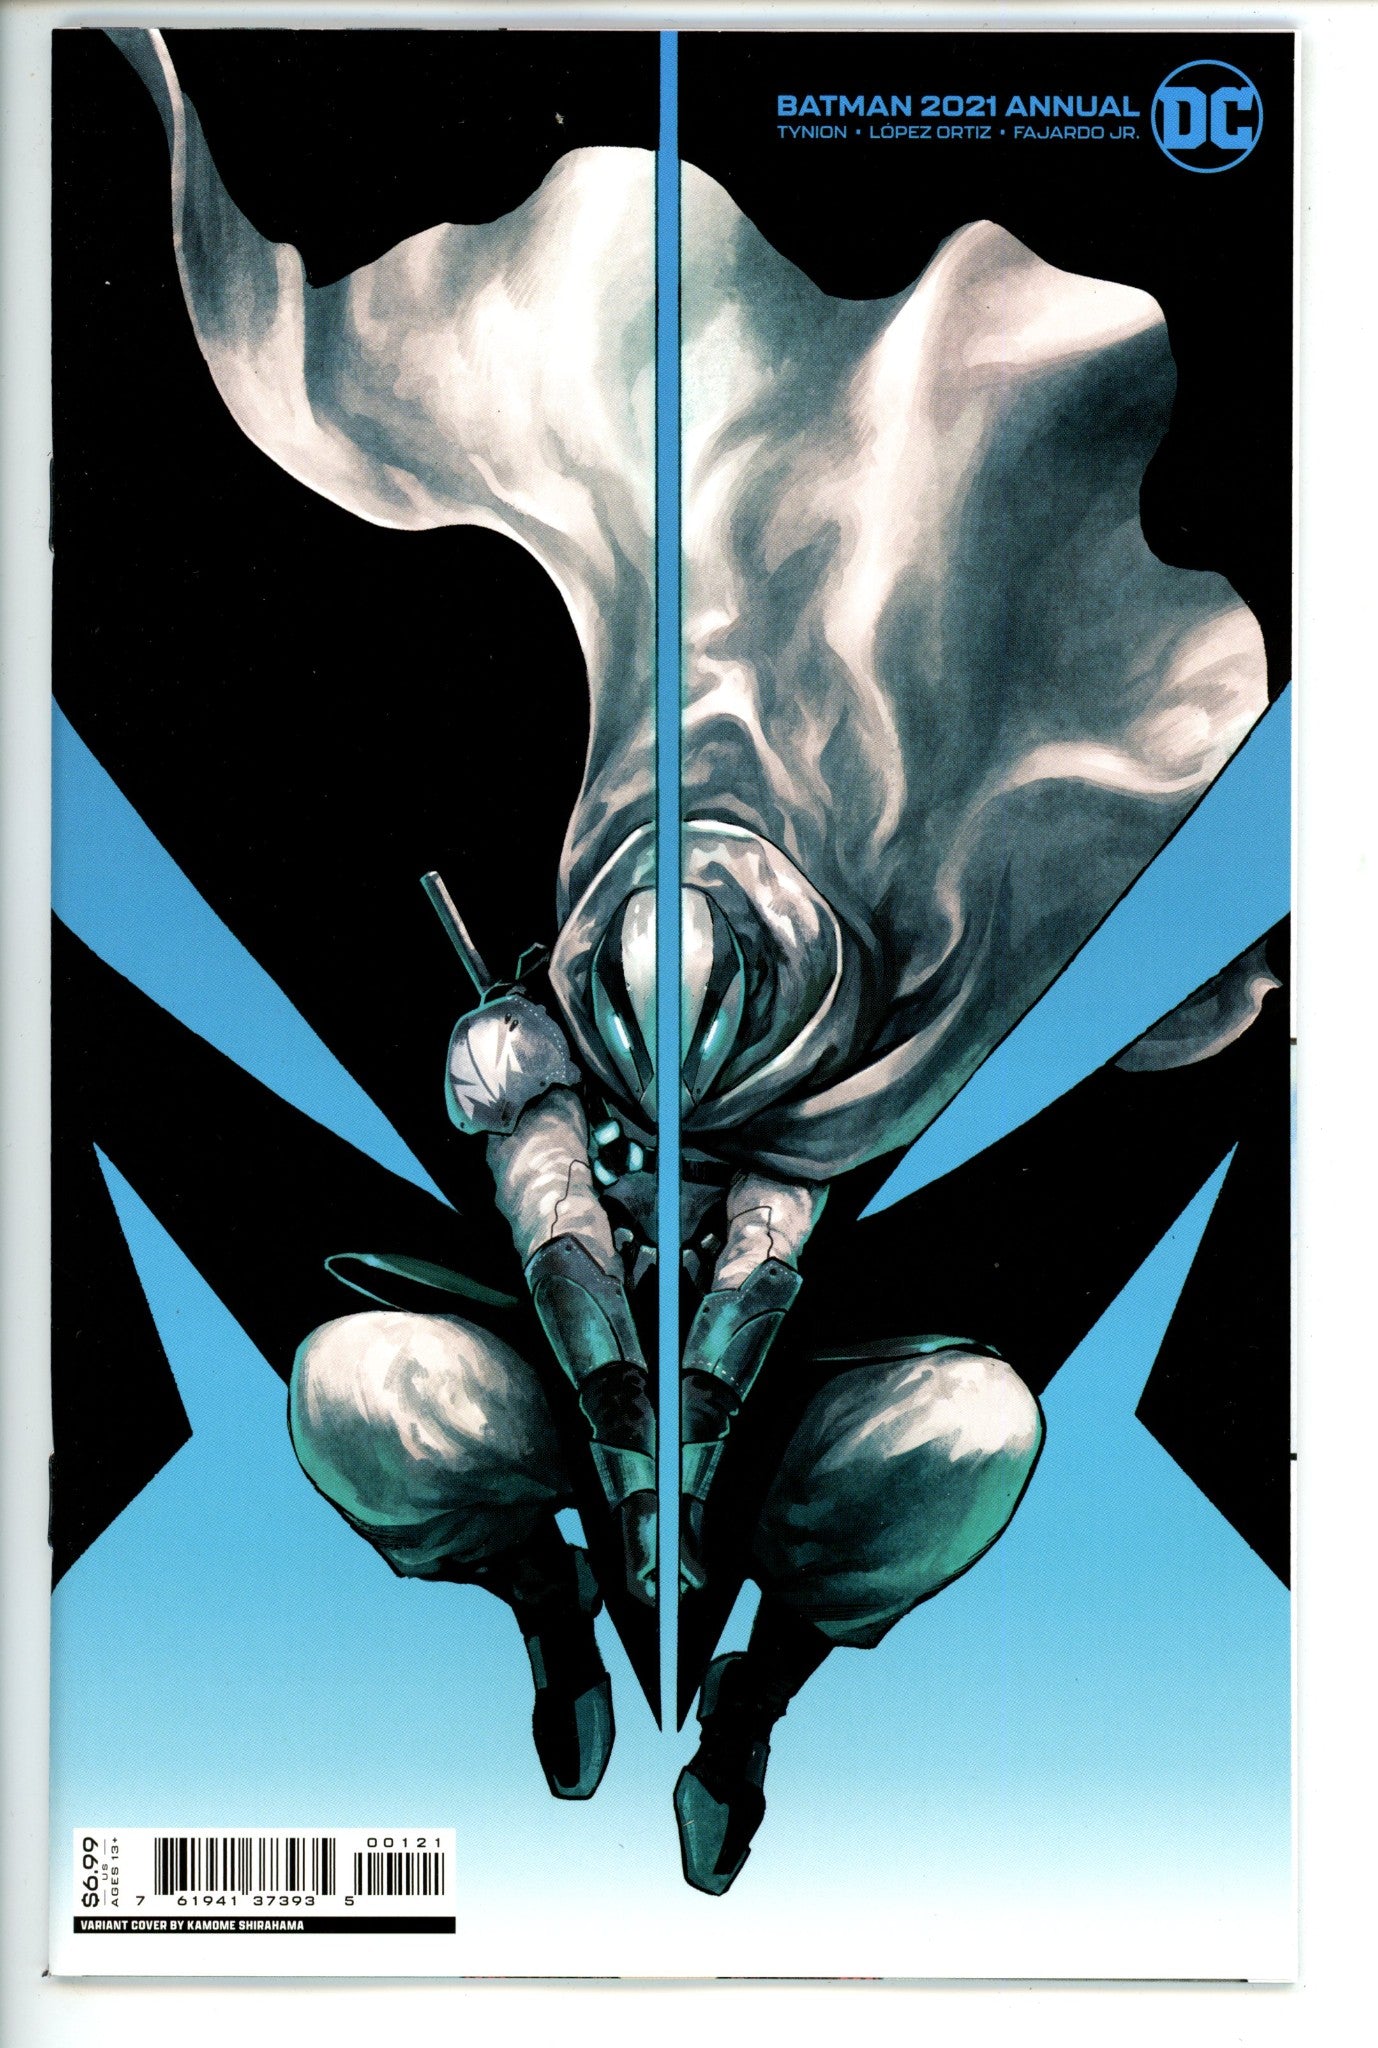 Batman Vol 3 Annual 2021 Shirahama Variant (2021)